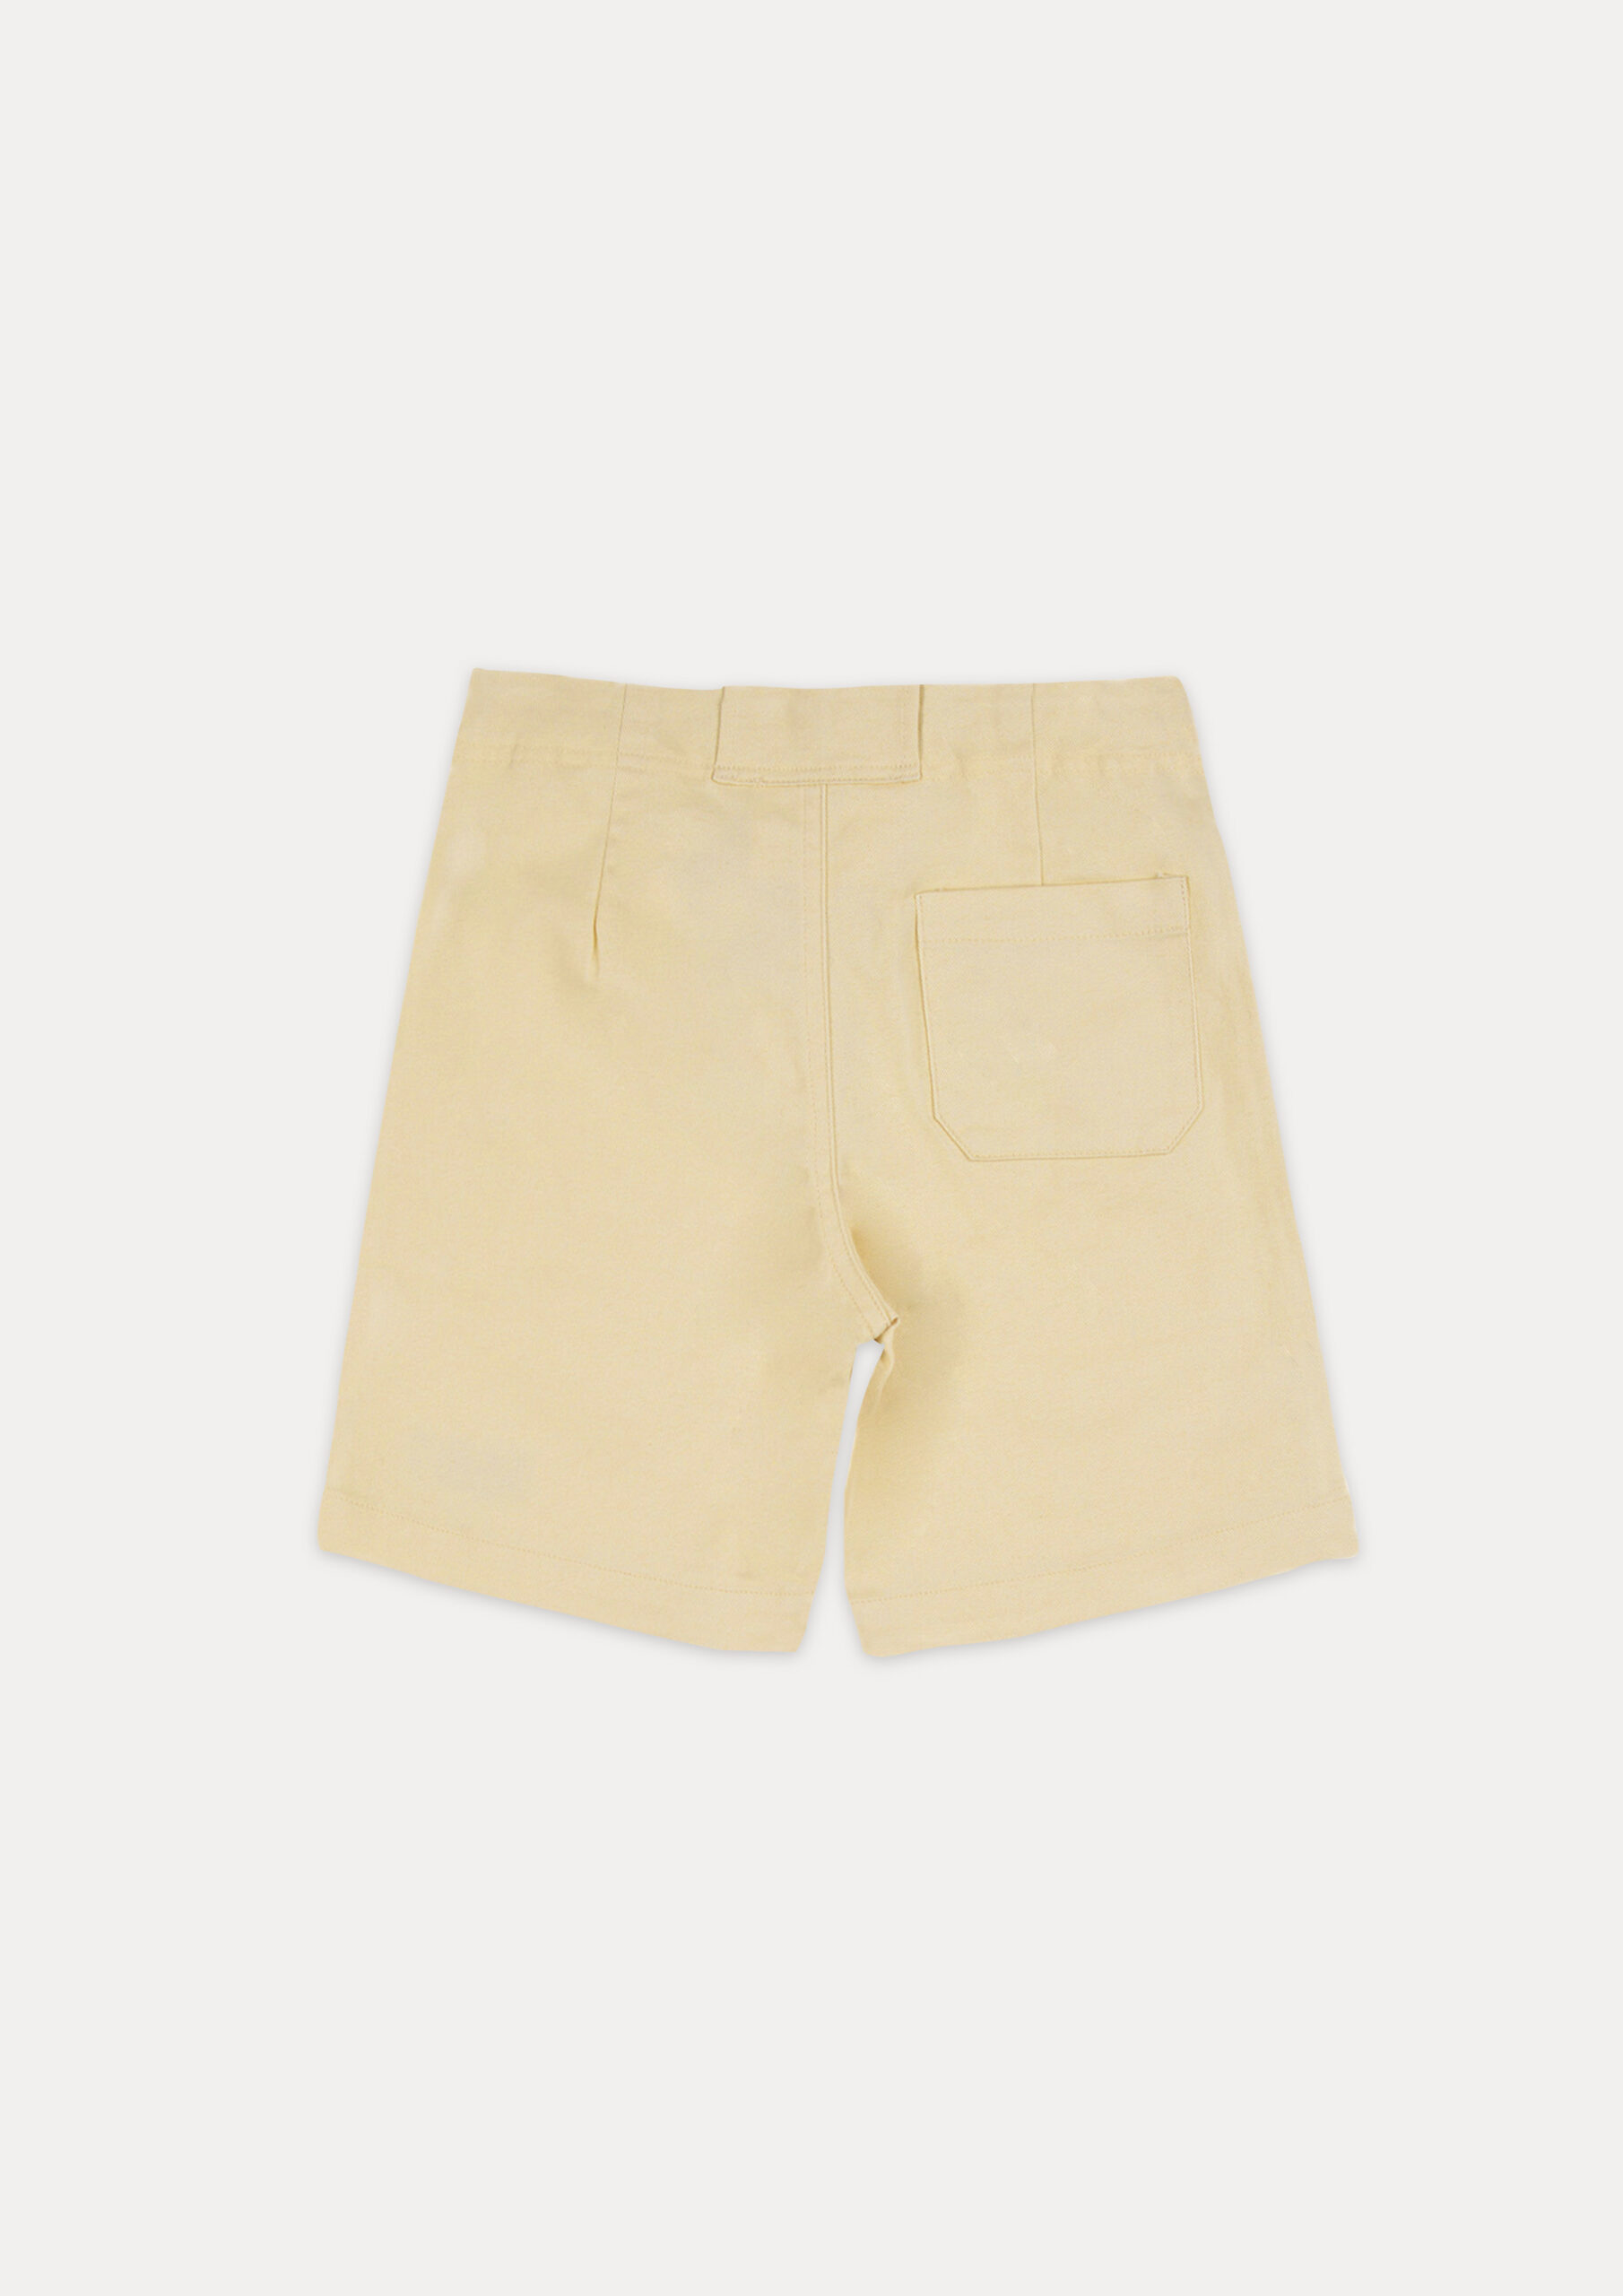 Oganic Cotton Yellow Short – M&7